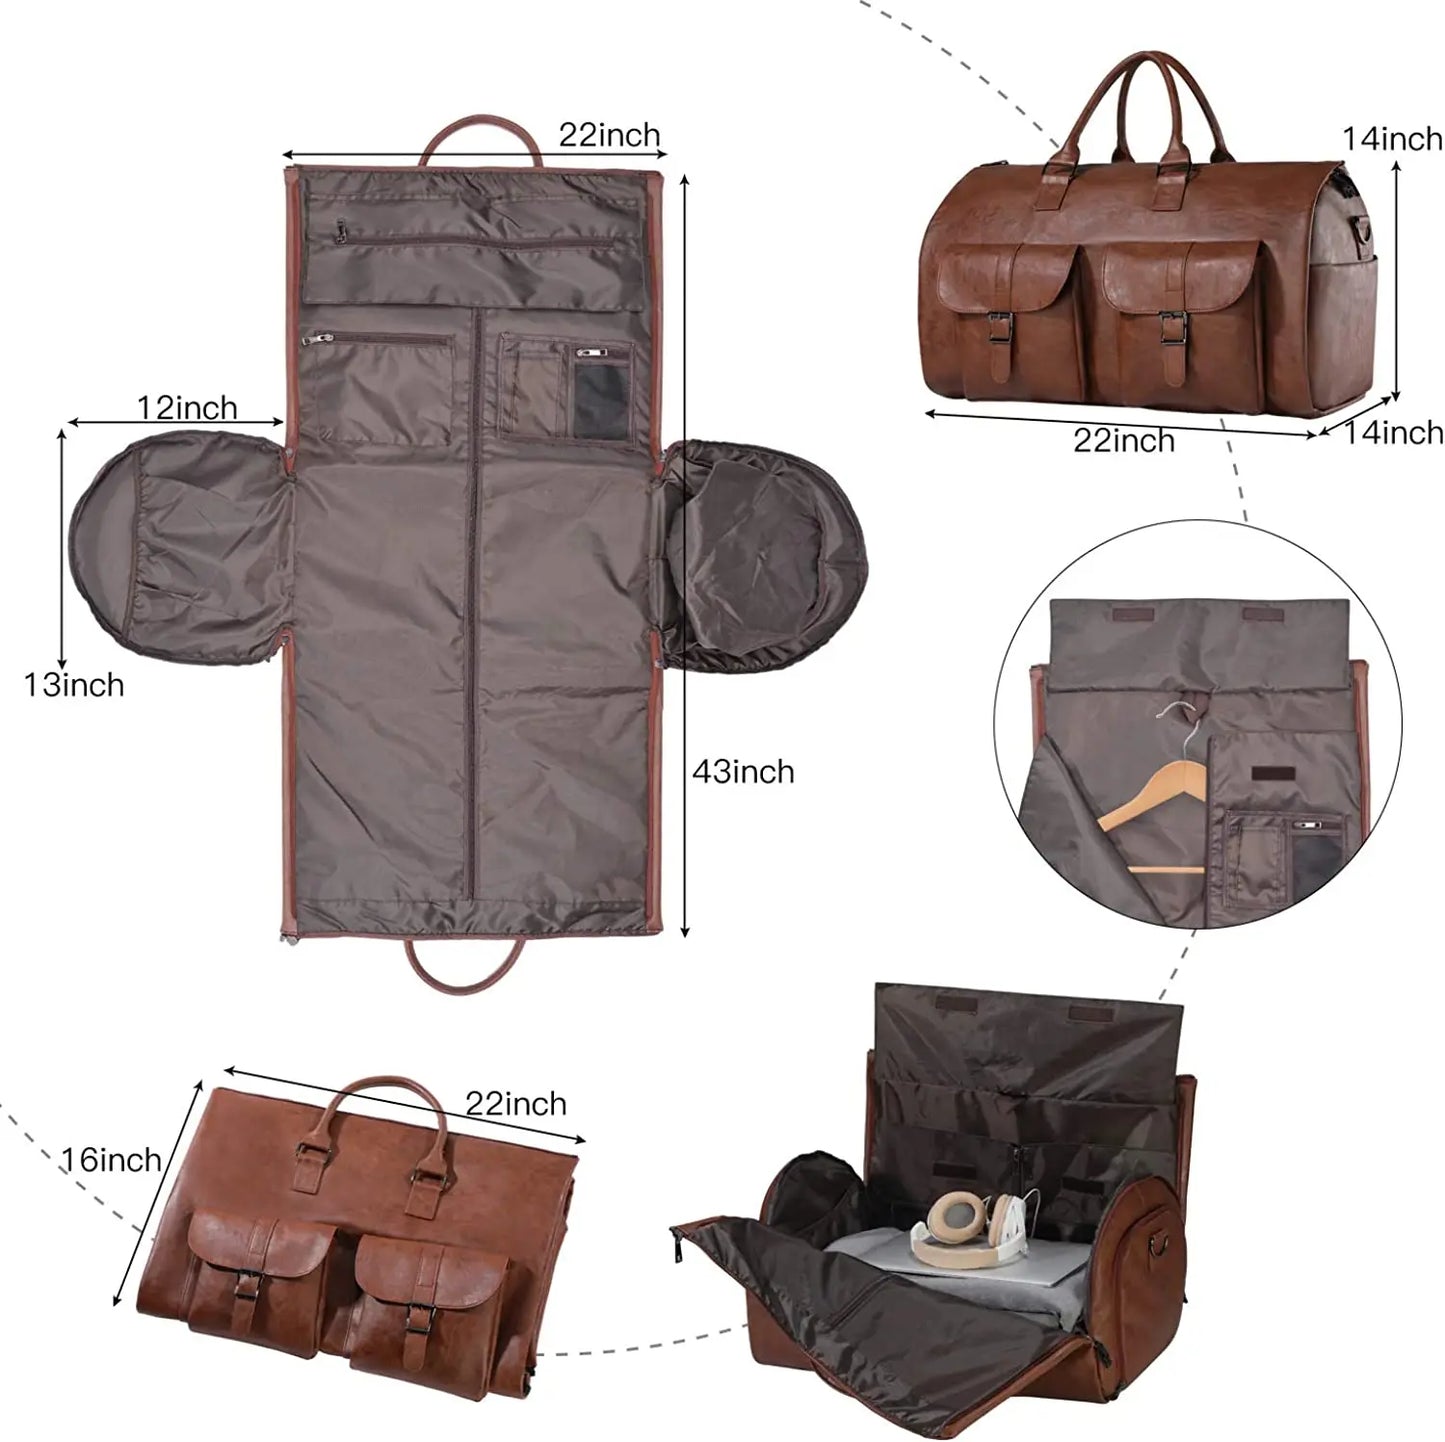 Convertible Travel Clothing Bag - Duffel Bag